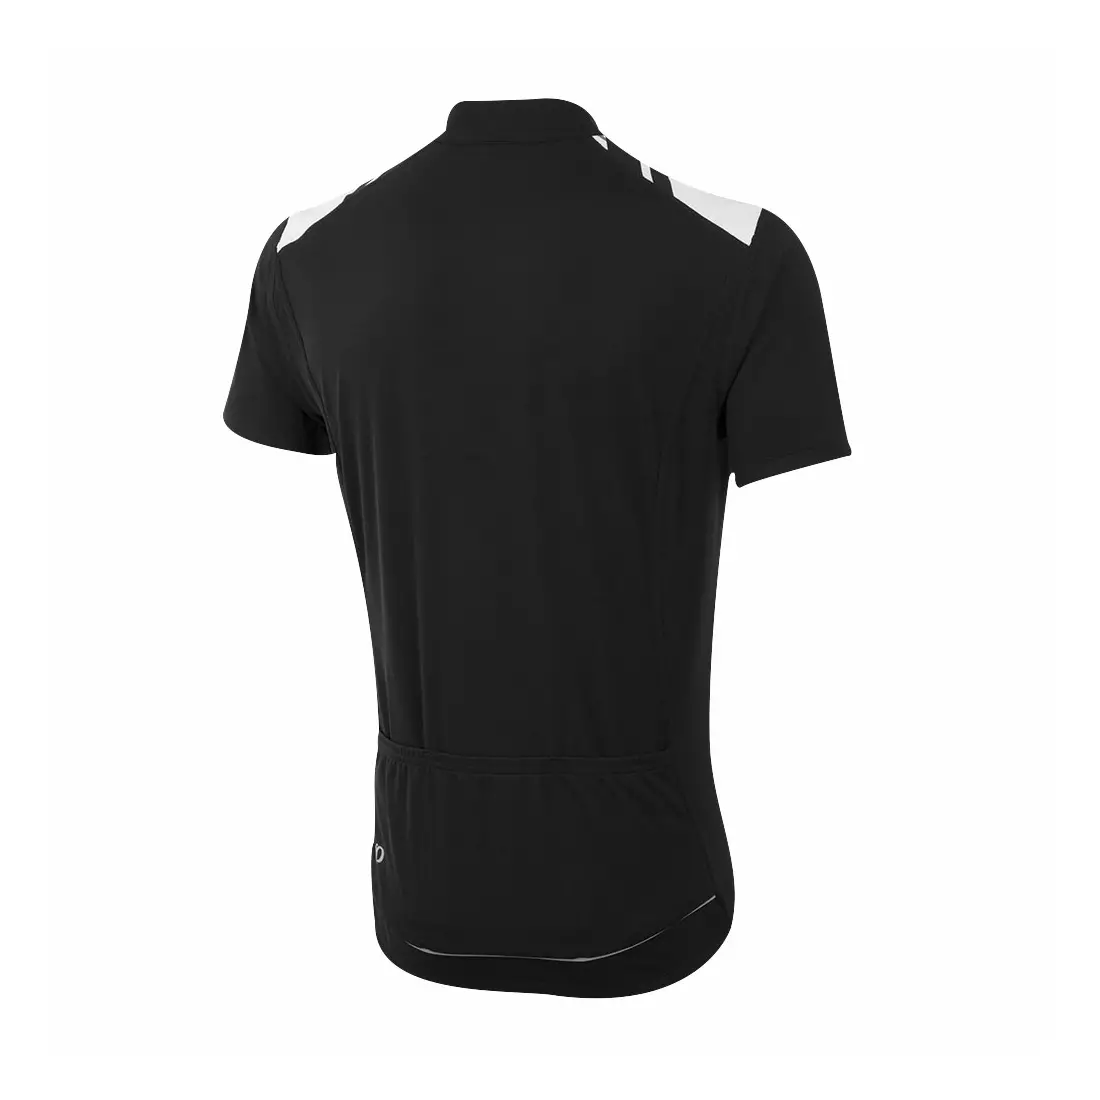 PEARL IZUMI QUEST men's cycling jersey, black 11121407-027